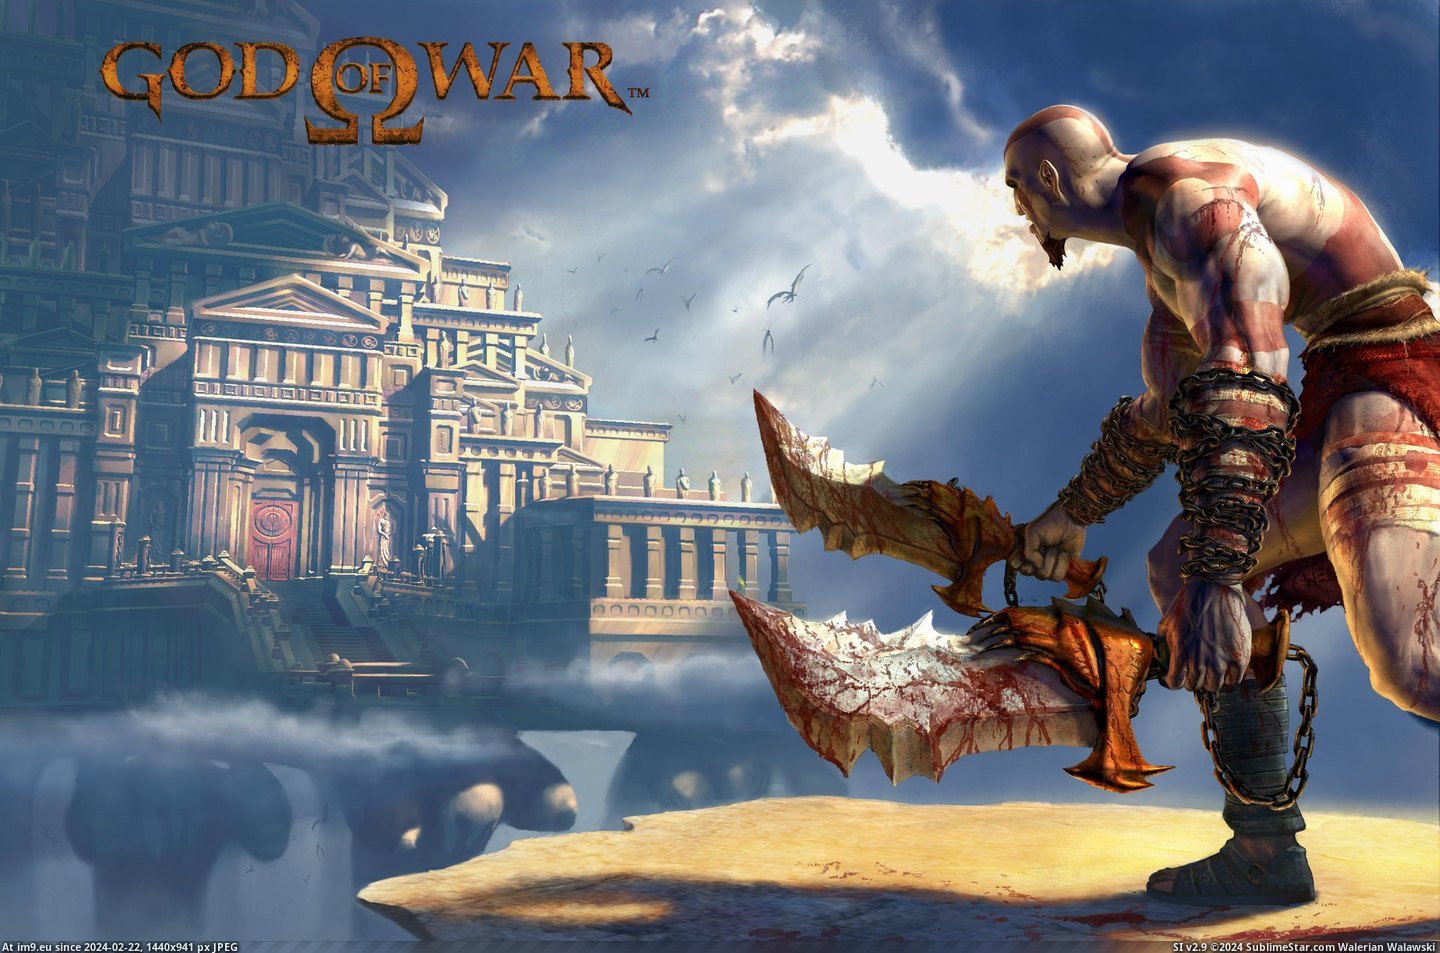 #Game #War #God #Video Video Game God Of War 2898 Pic. (Bild von album Games Wallpapers))